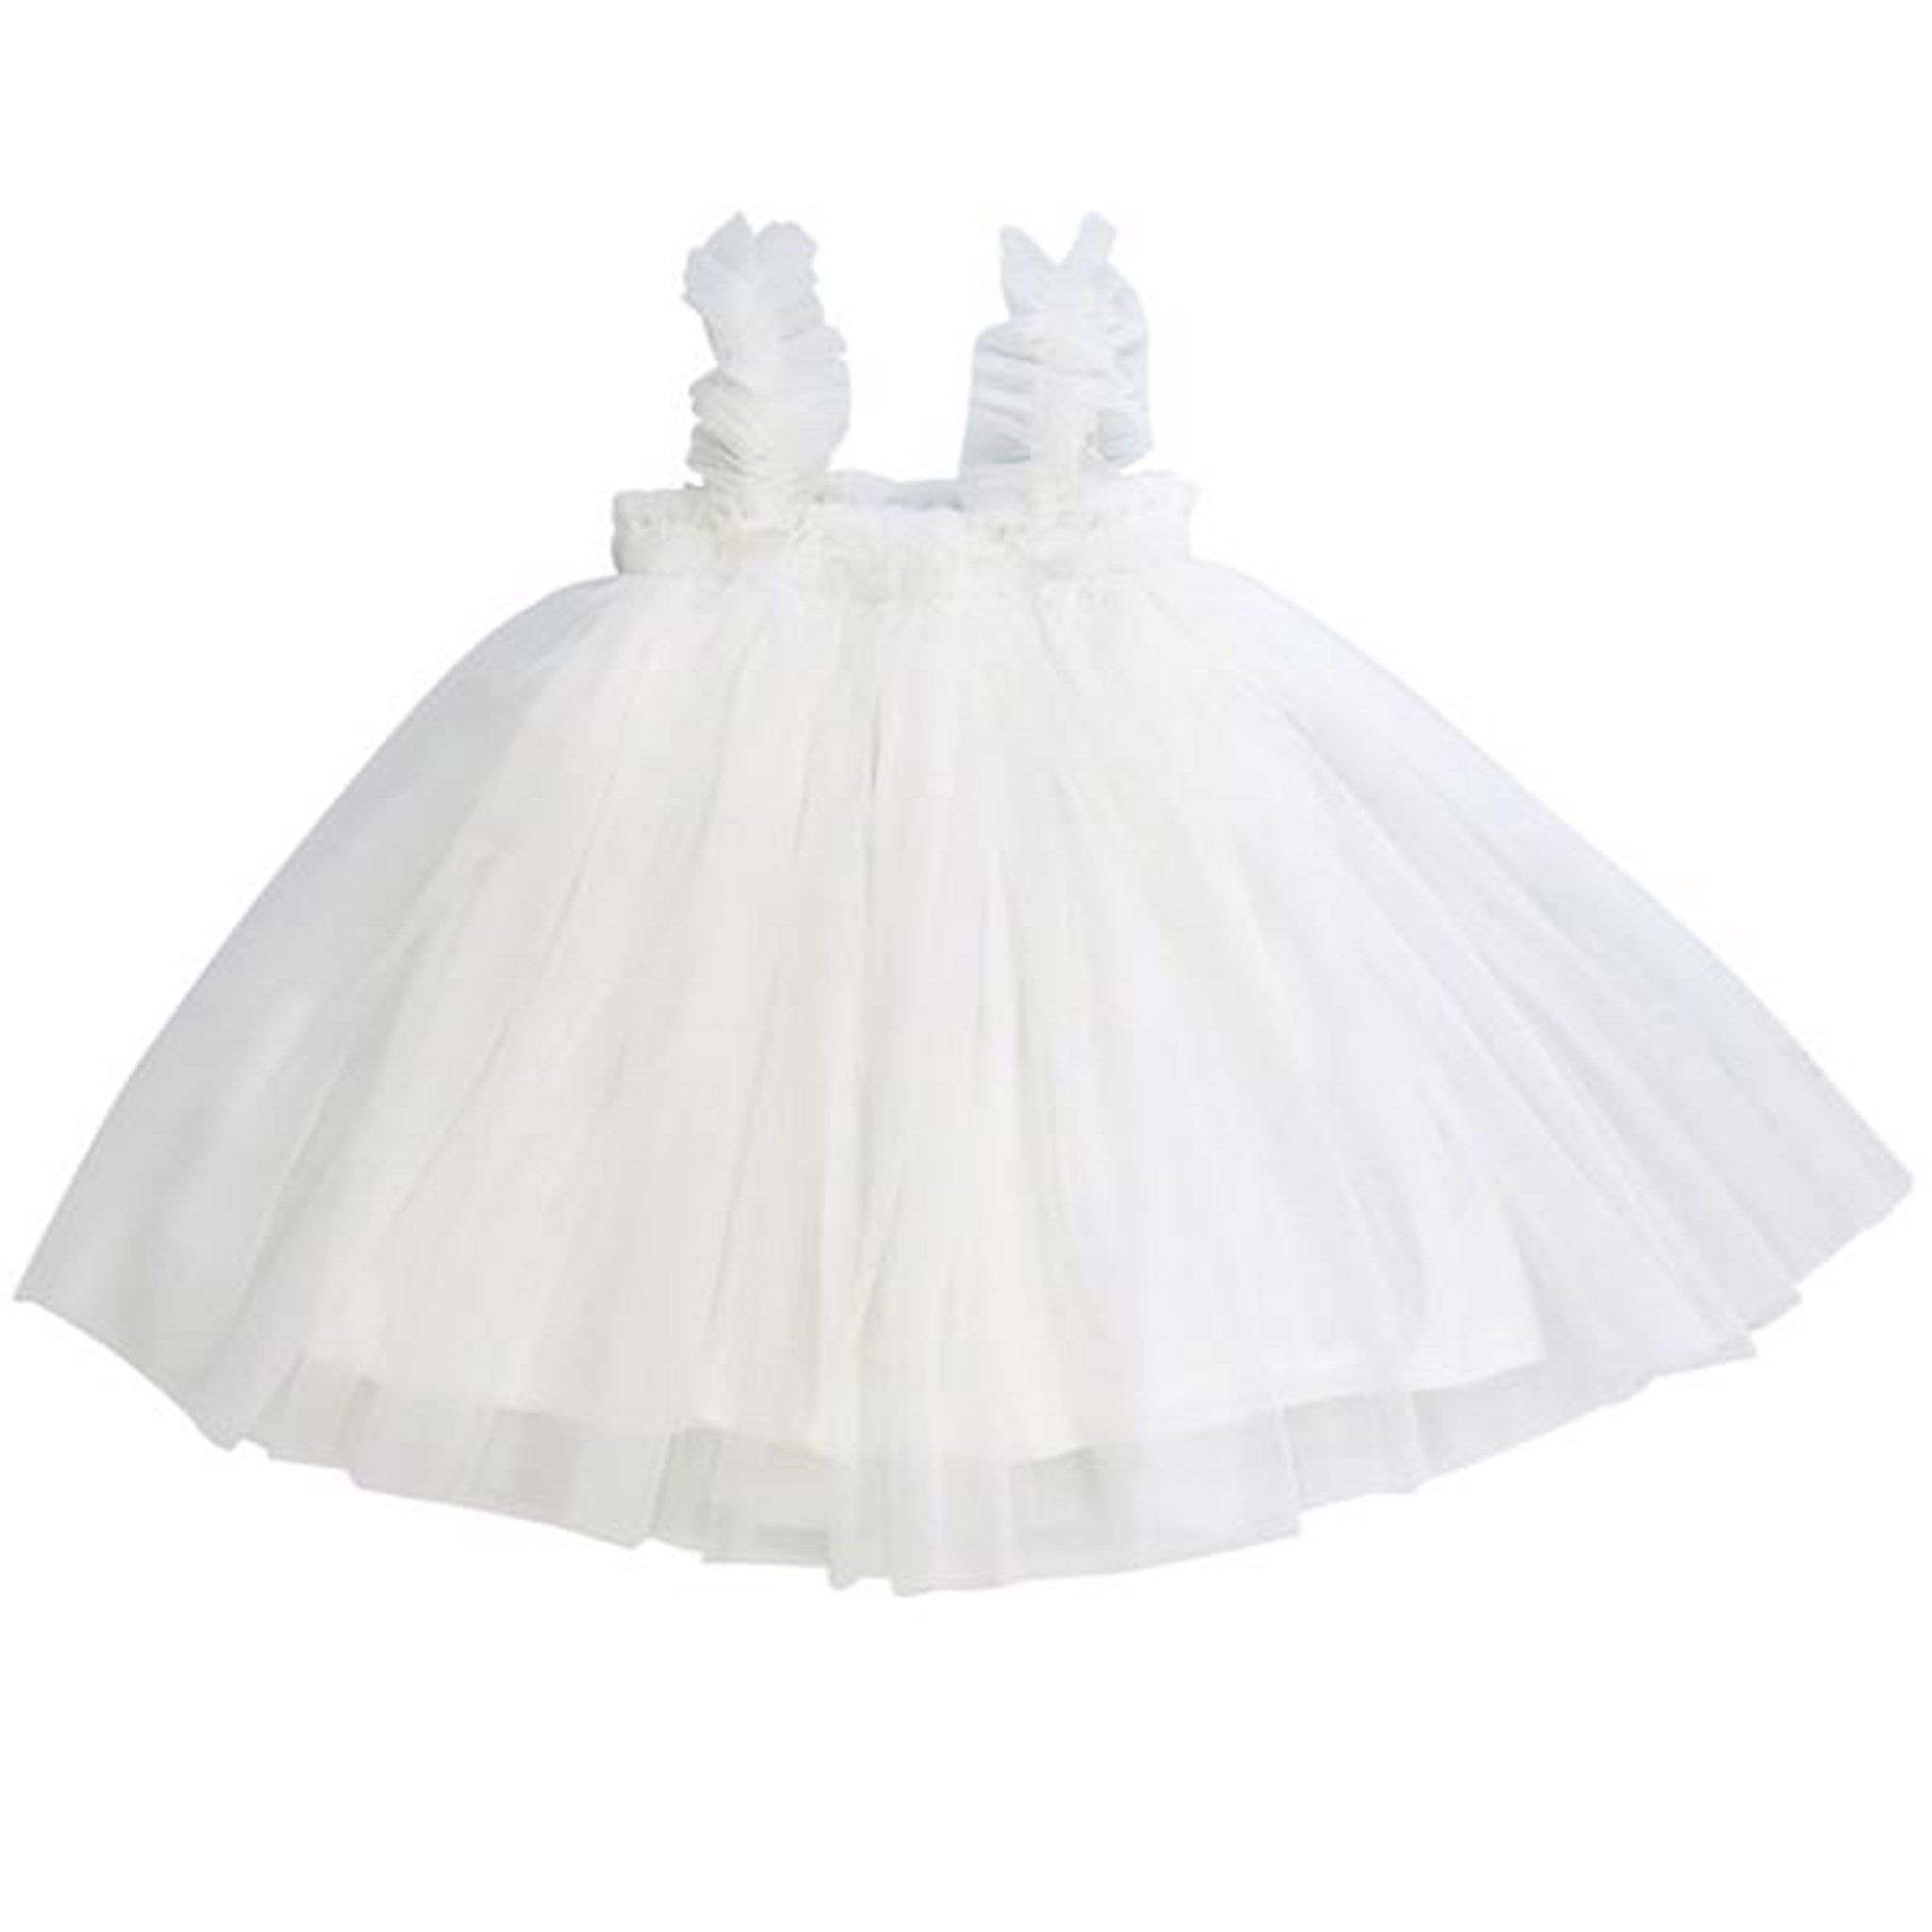 Dolly by Le Petit Tutu Dress White